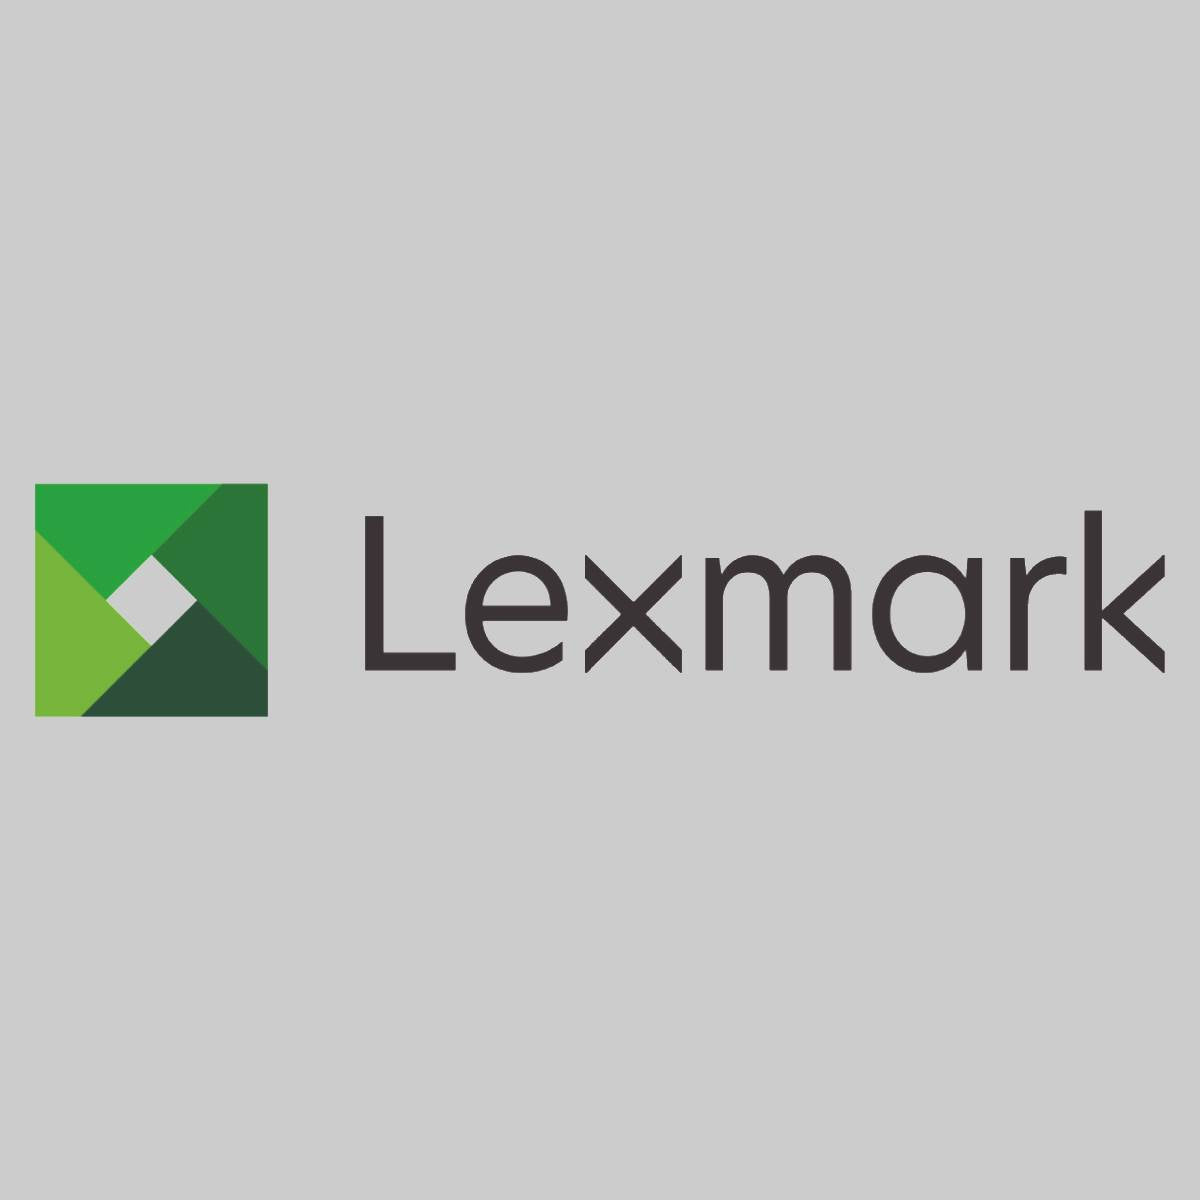 "Genuine Lexmark Ribbons 11A3540 for Lexmark 2380 2381 2391 2480 2580 2581 PLUS